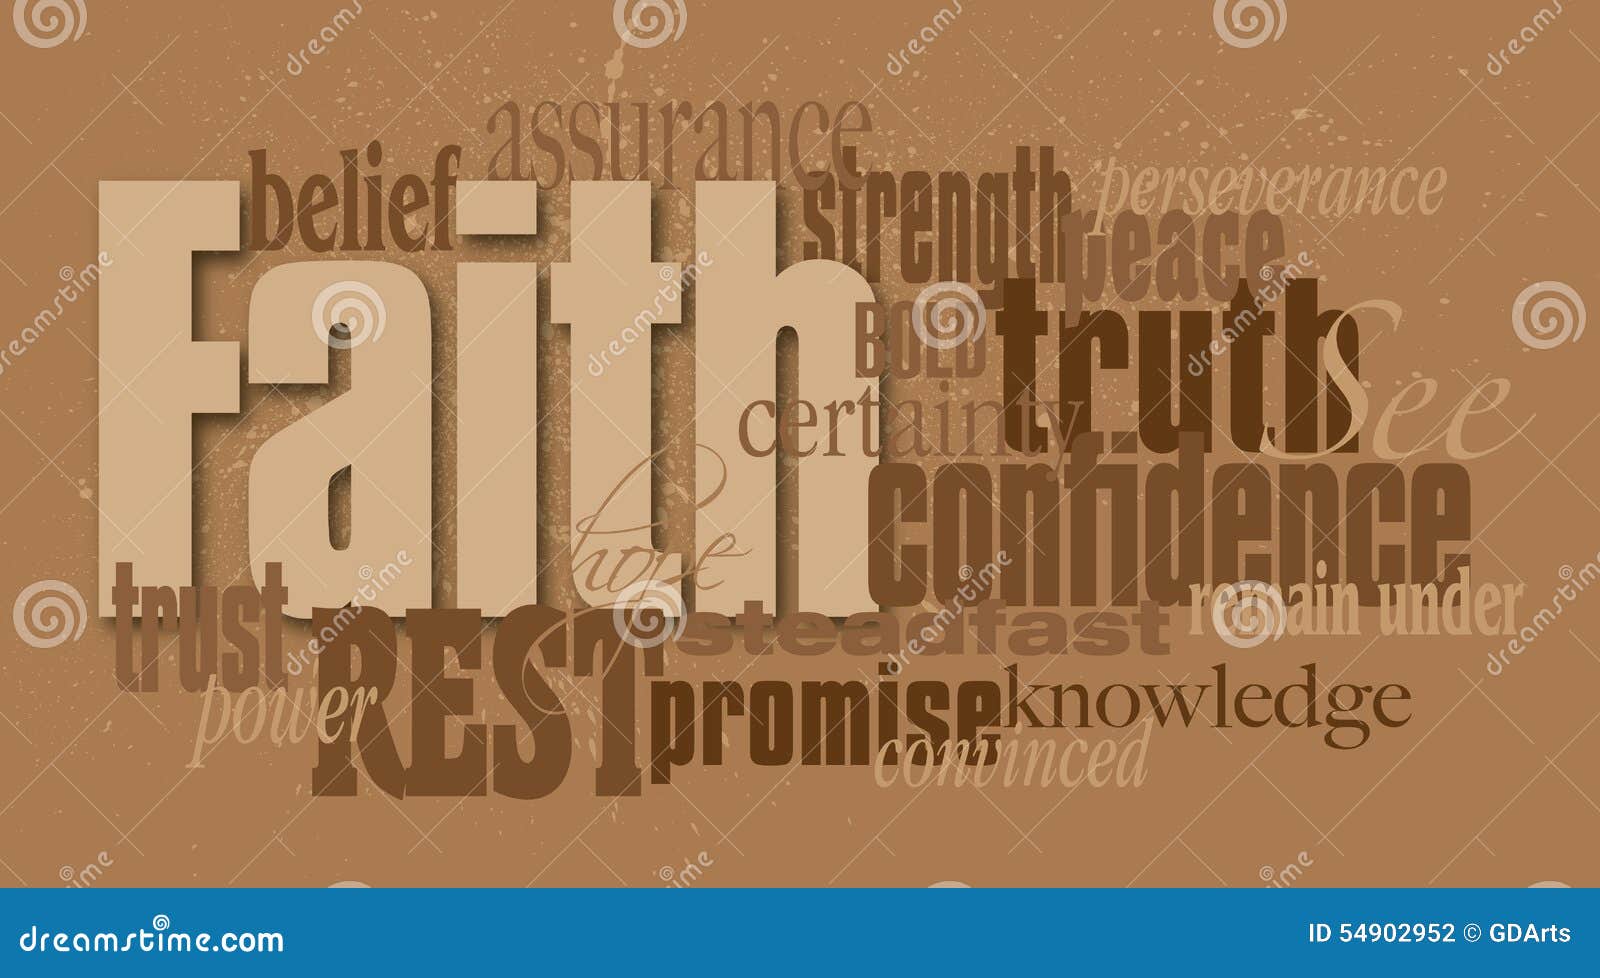 faith word graphic montage